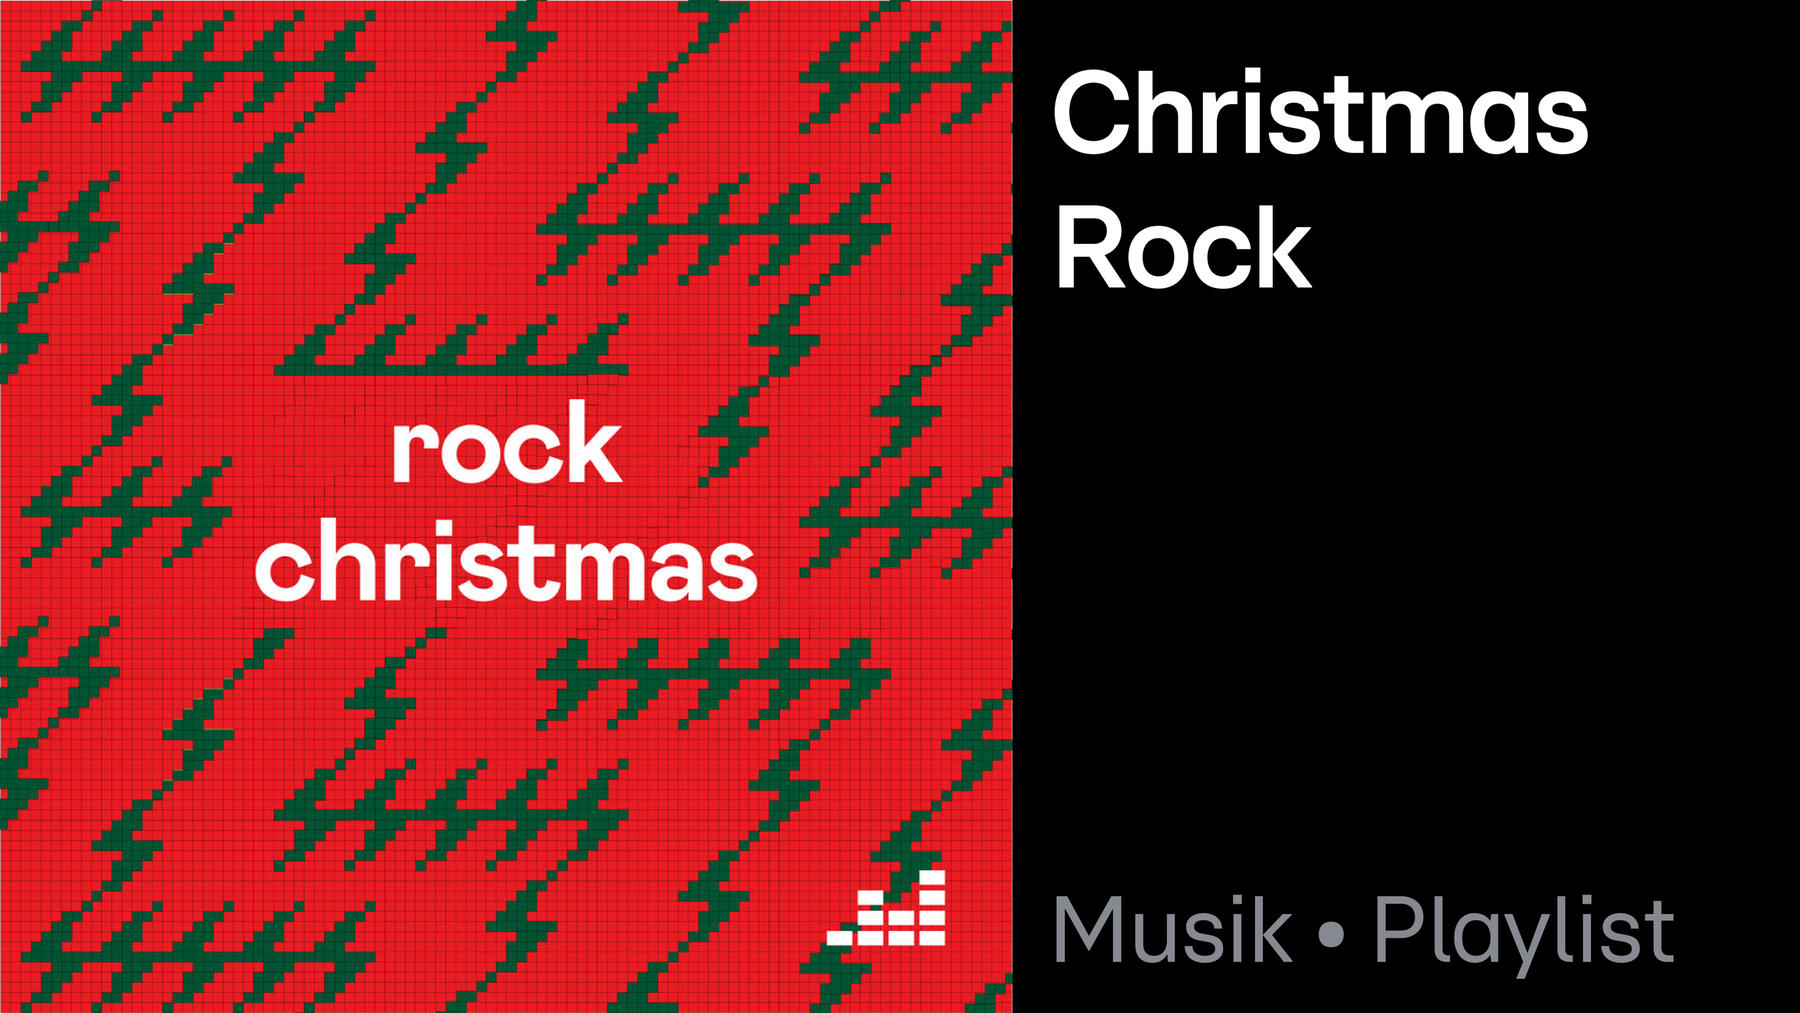 Playlist: Christmas Rock